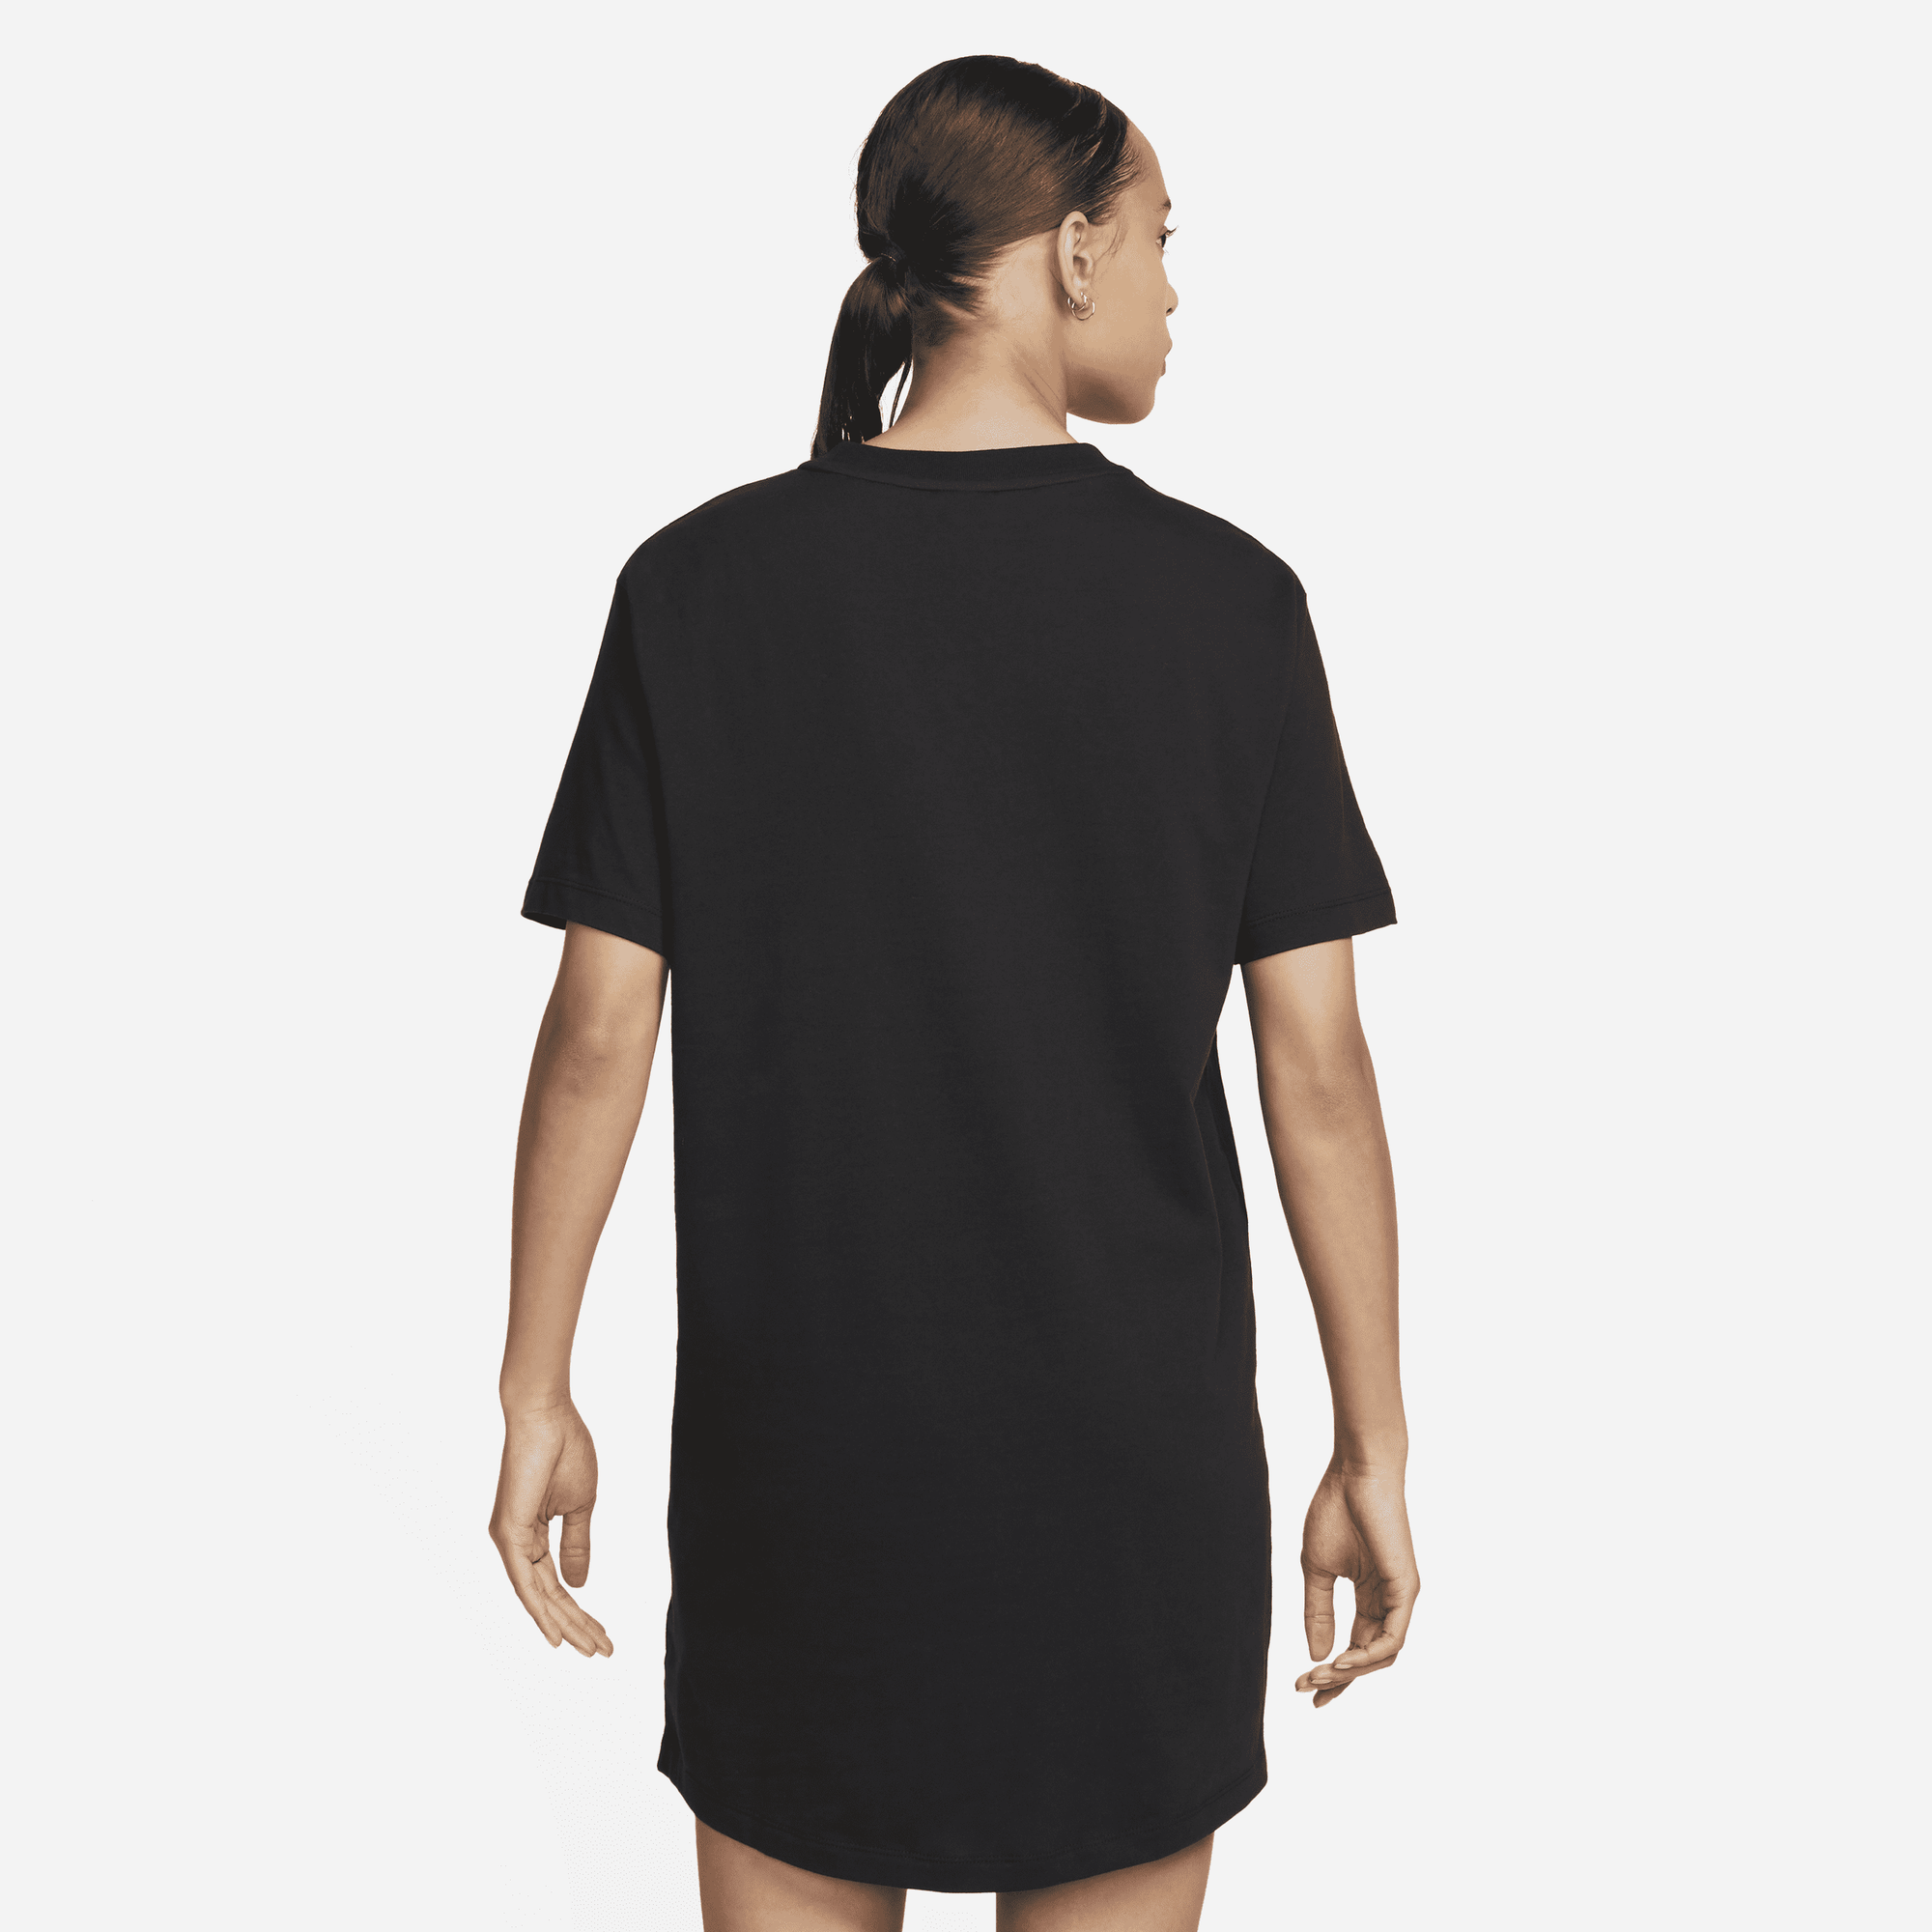 Nike Sportswear Chill Knit Women's Oversized T-Shirt Dress. Nike LU